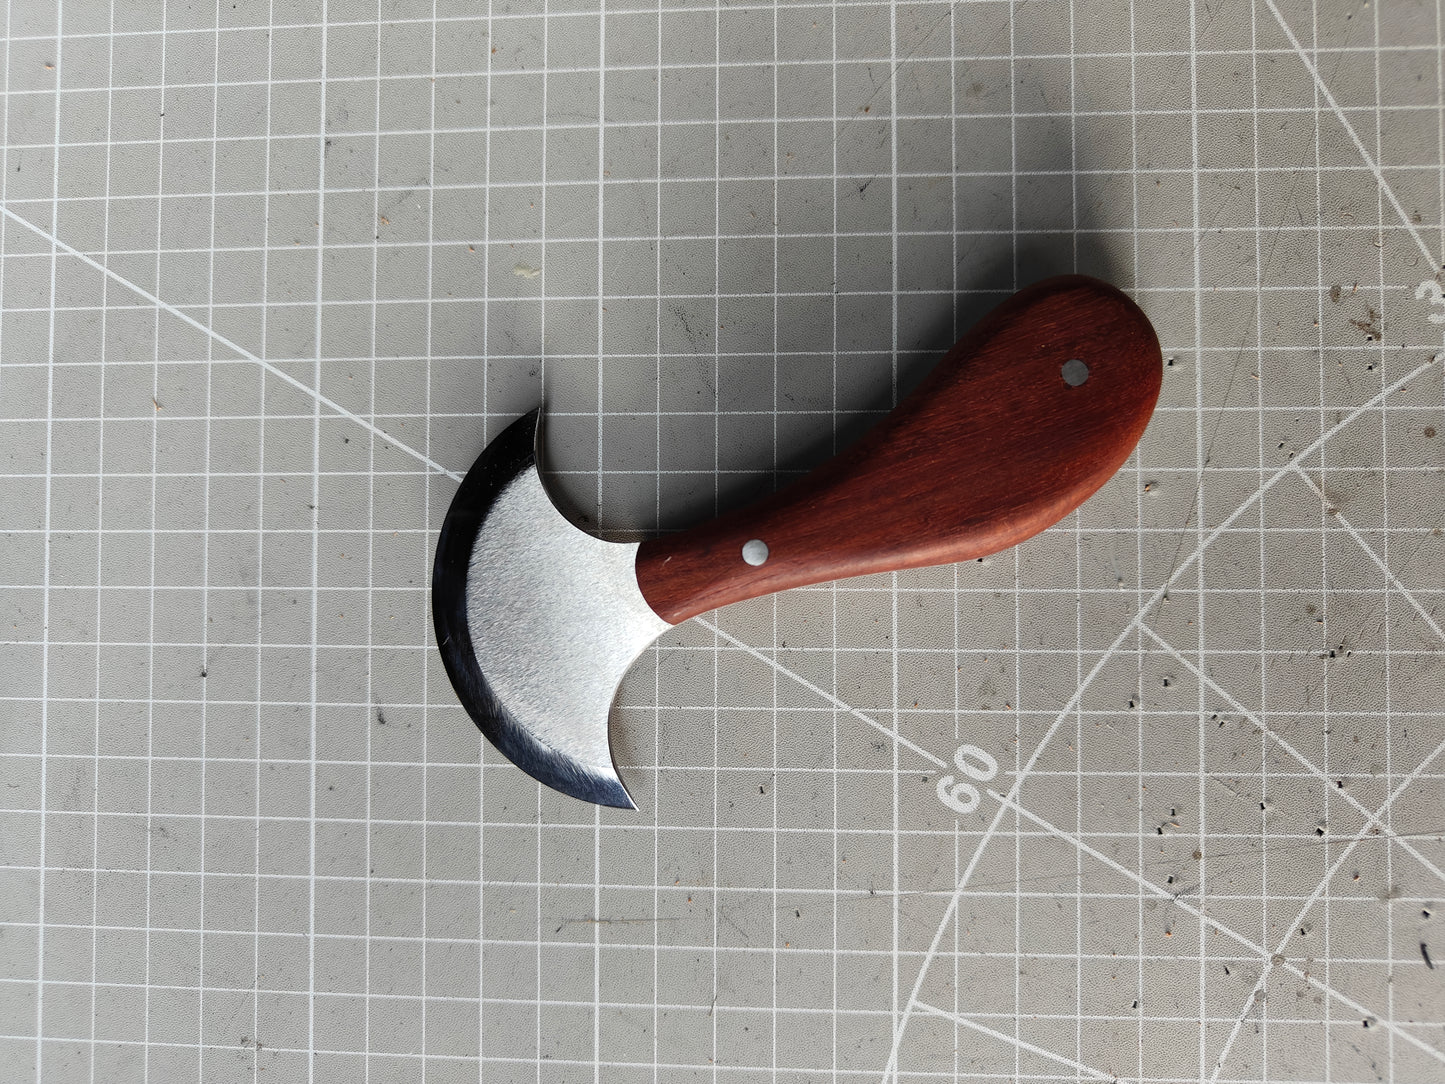 KL Full-tang small round knife